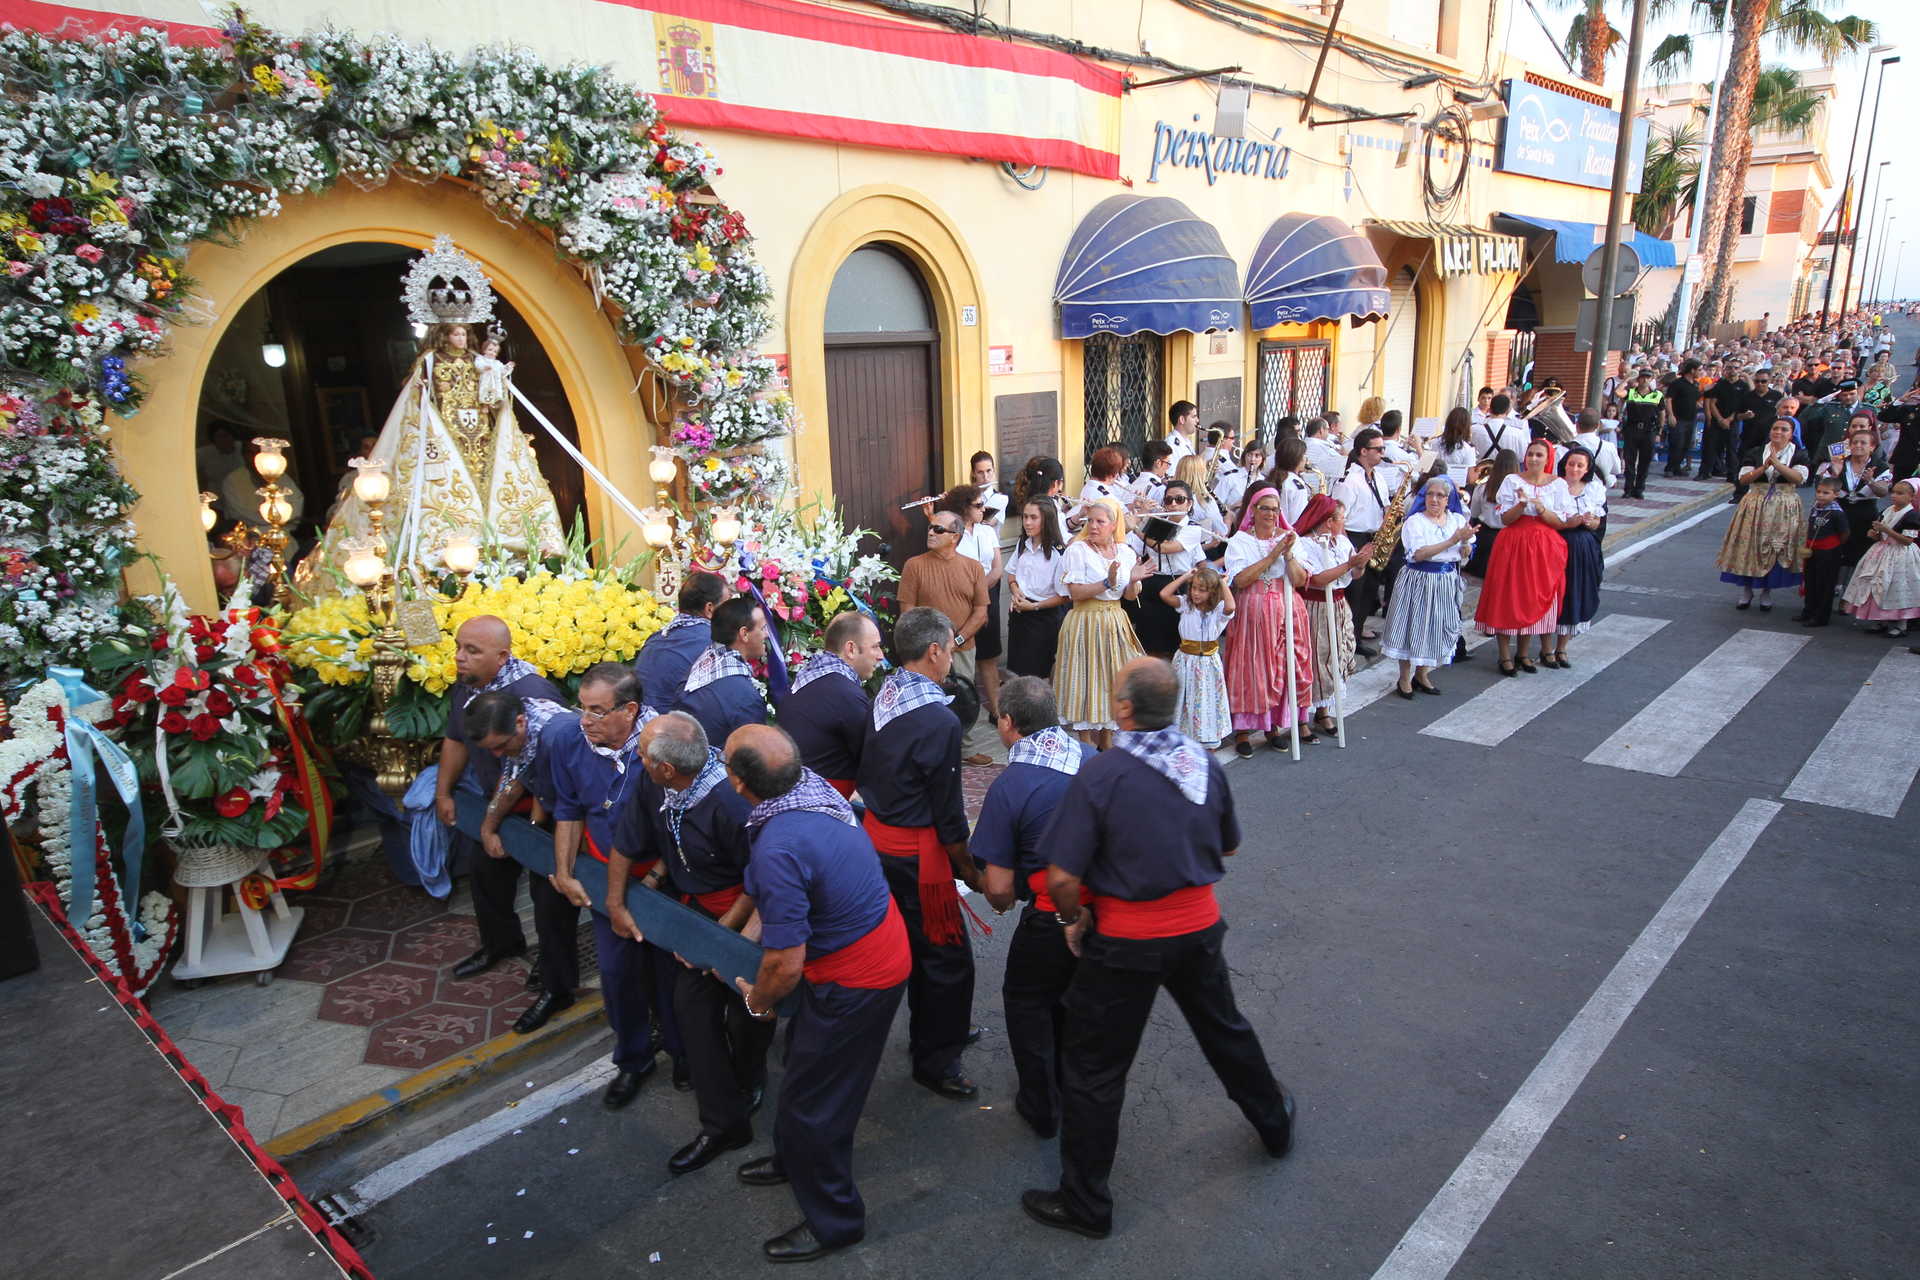 Festivities in honour of the Virgen del Carmen